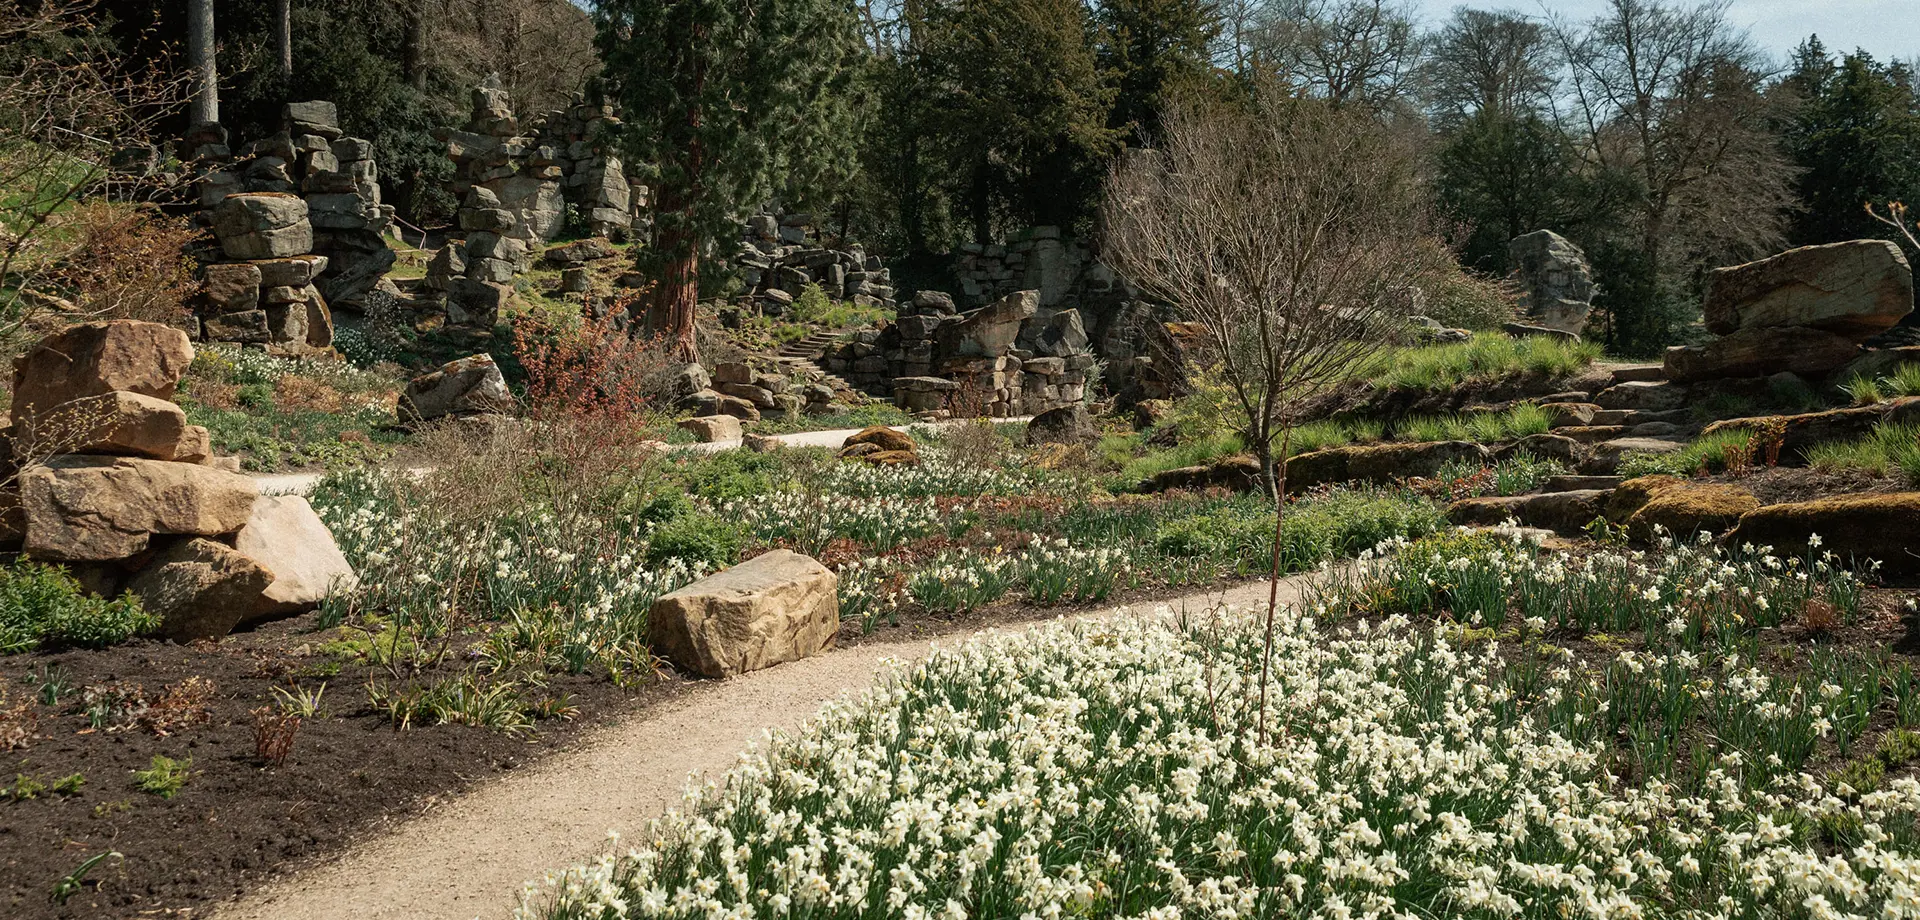 In the Chatsworth Garden: bulbs in bloom